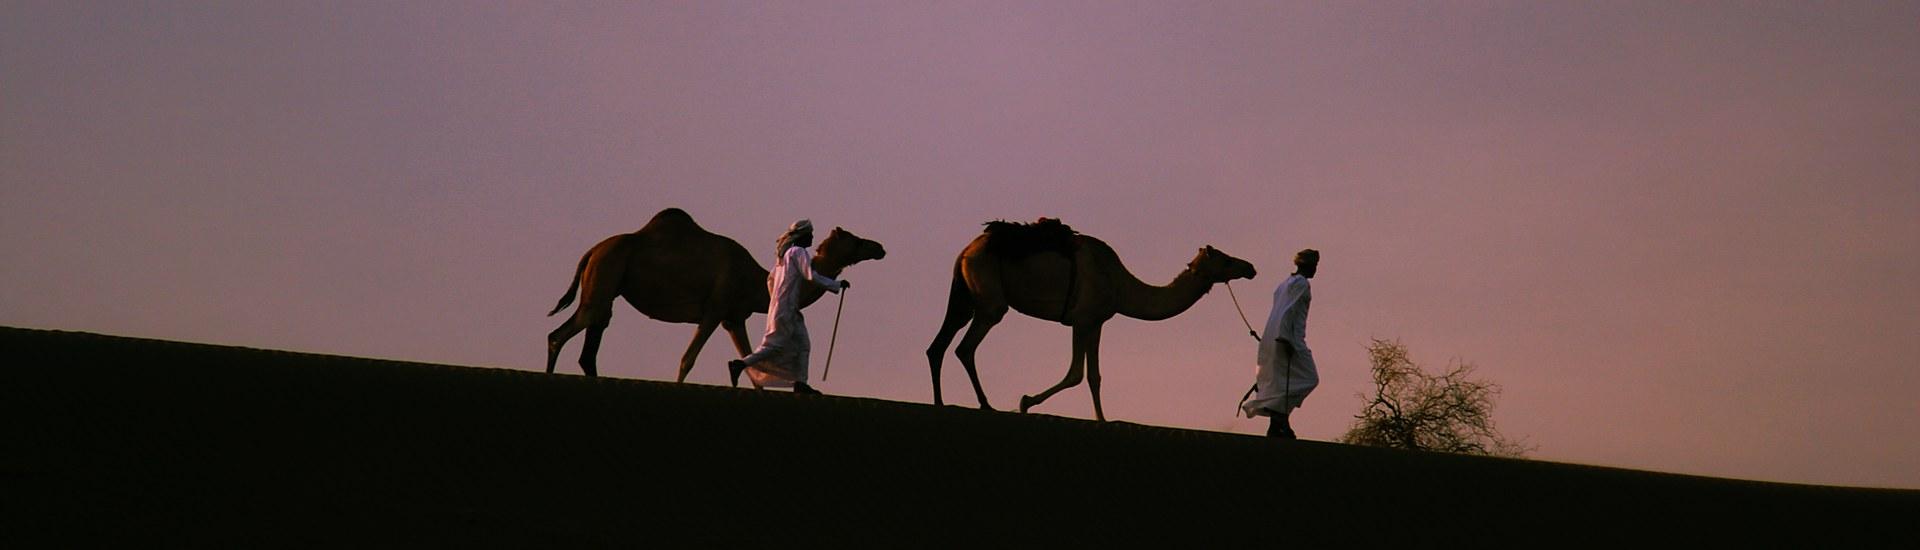 zz_Oman - skarby Arabii